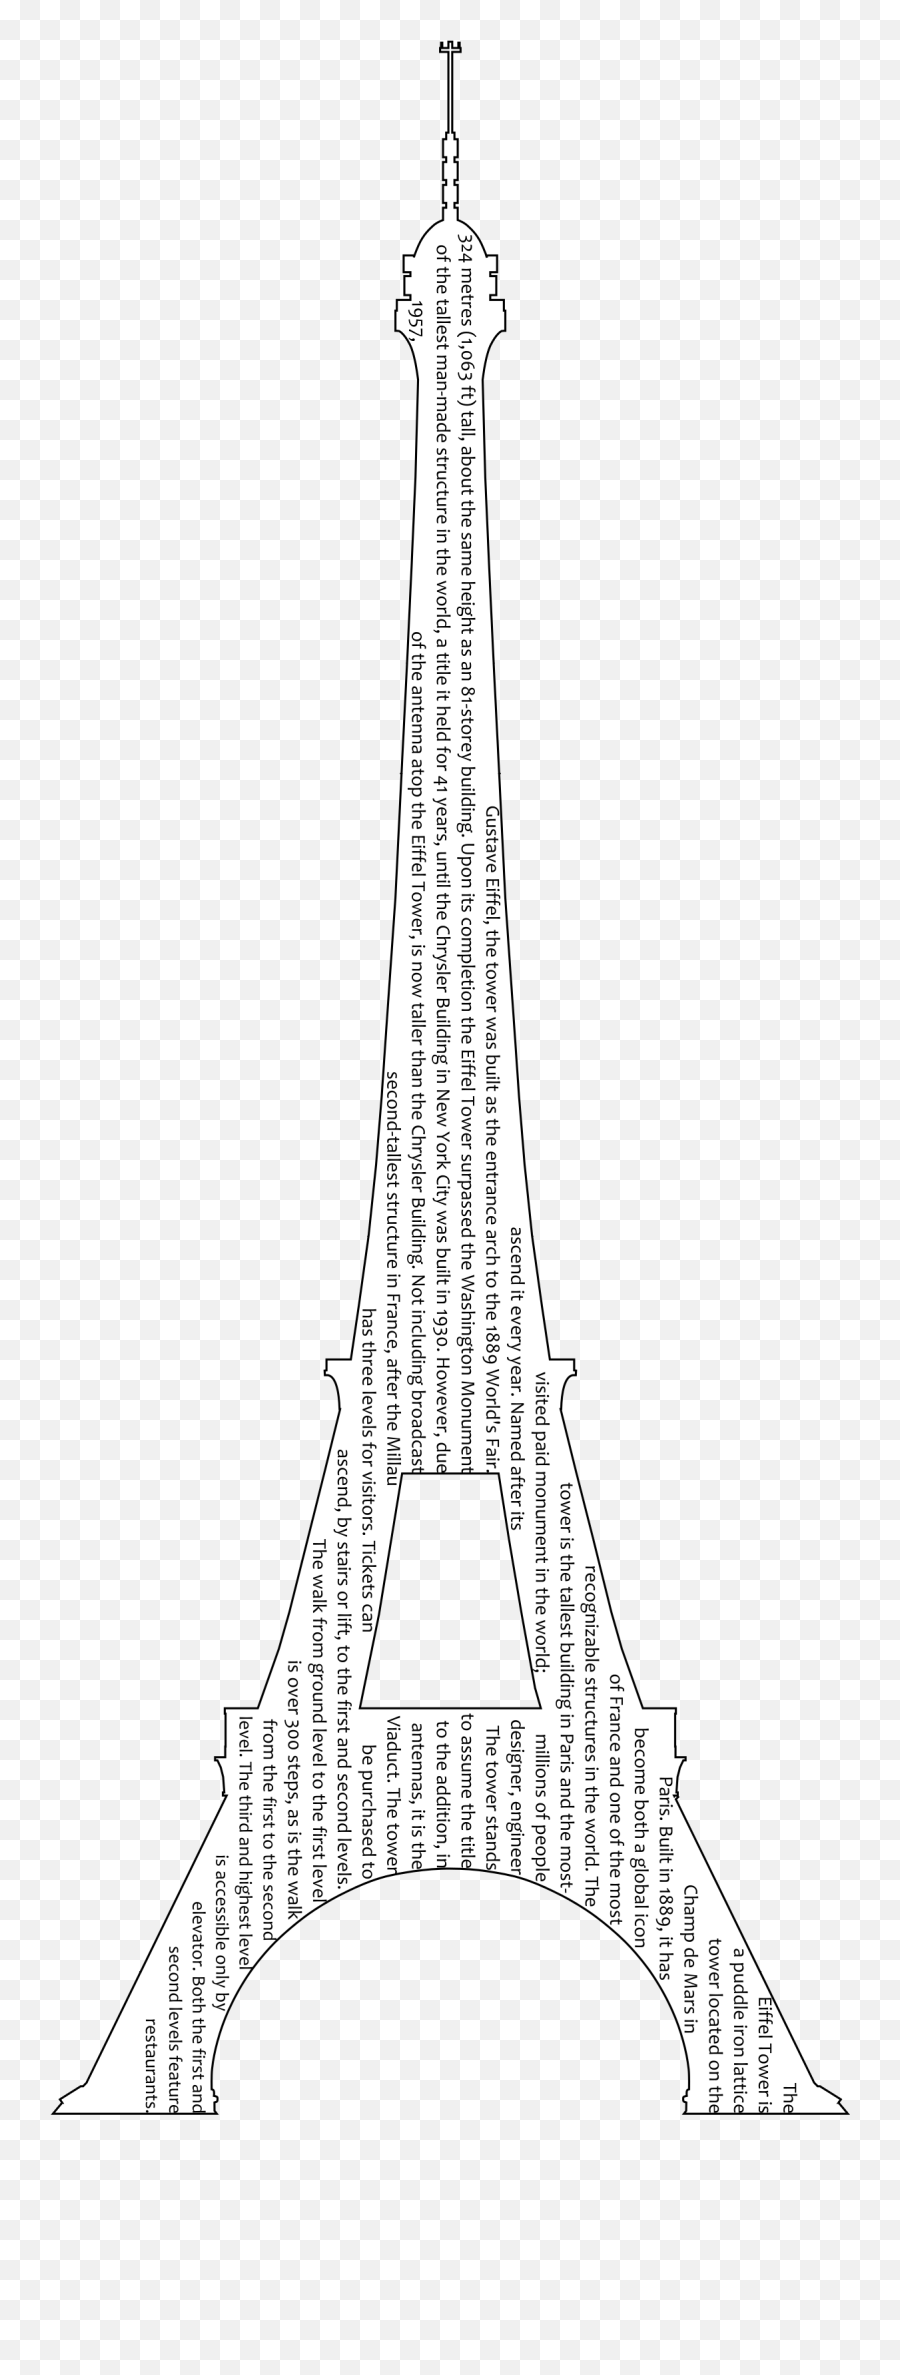 Fileeiffel Tower Calligramsvg - Wikimedia Commons Calligram Of An Eiffel Tower Png,Eifel Tower Png